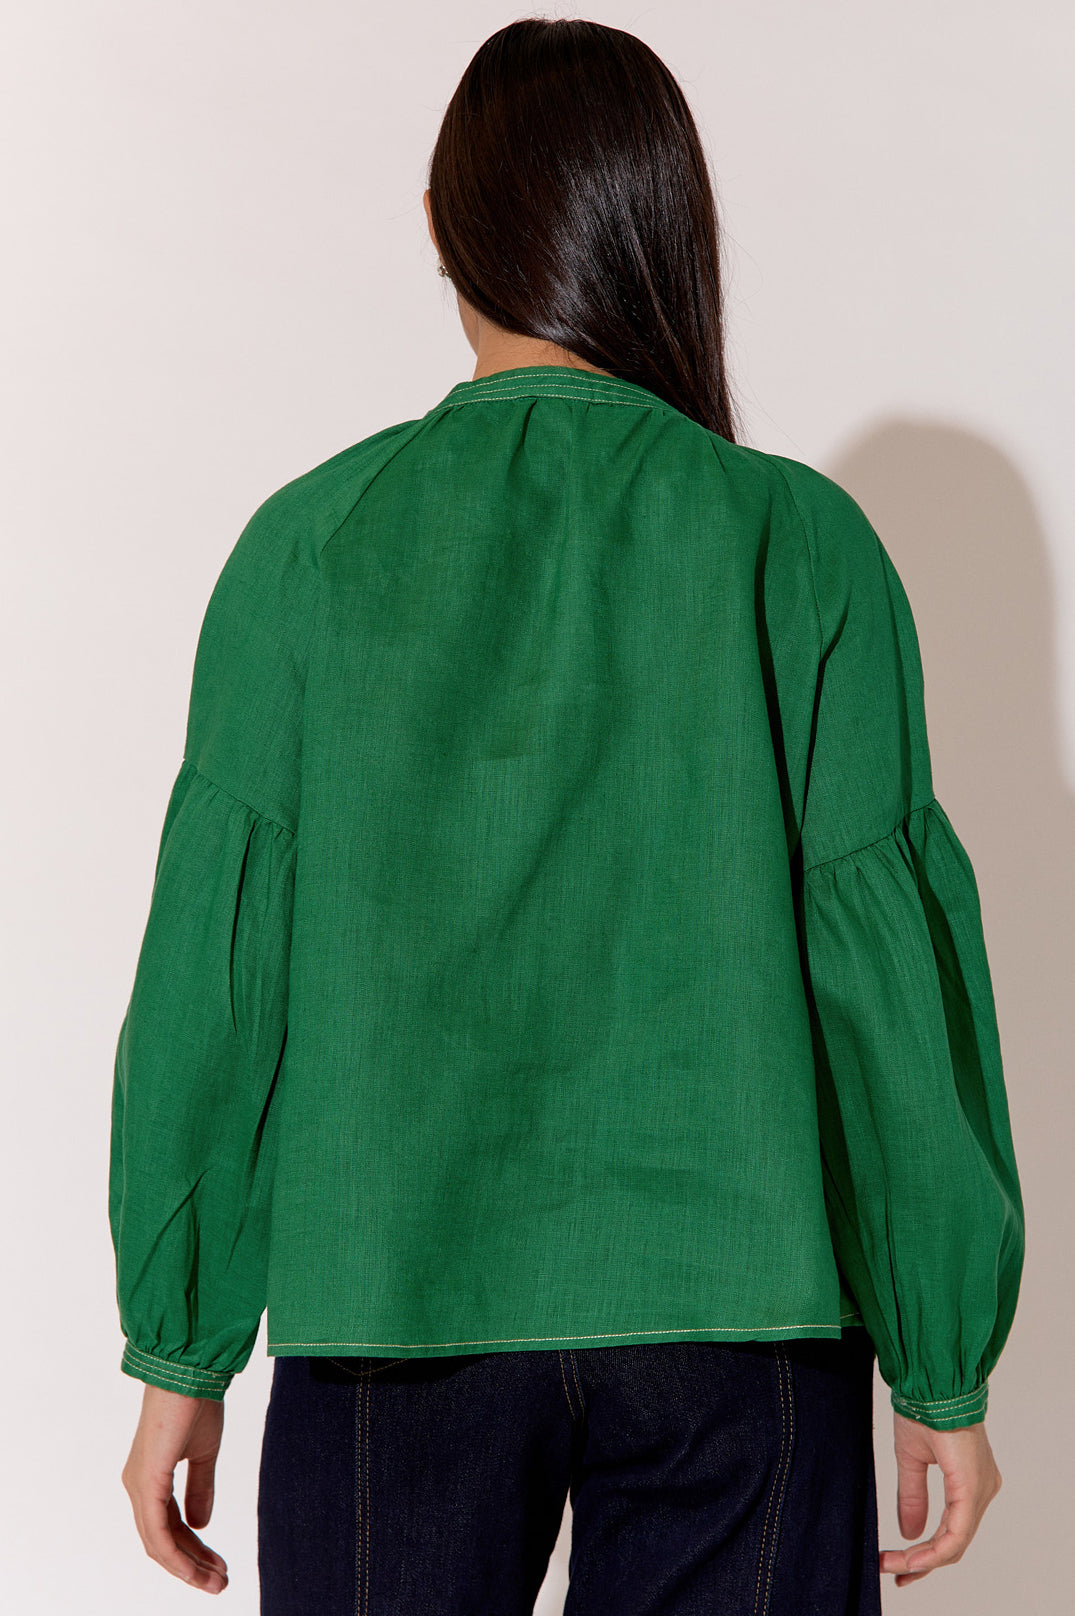 Adorne Tristan Contrast Stitch Linen Top - Green